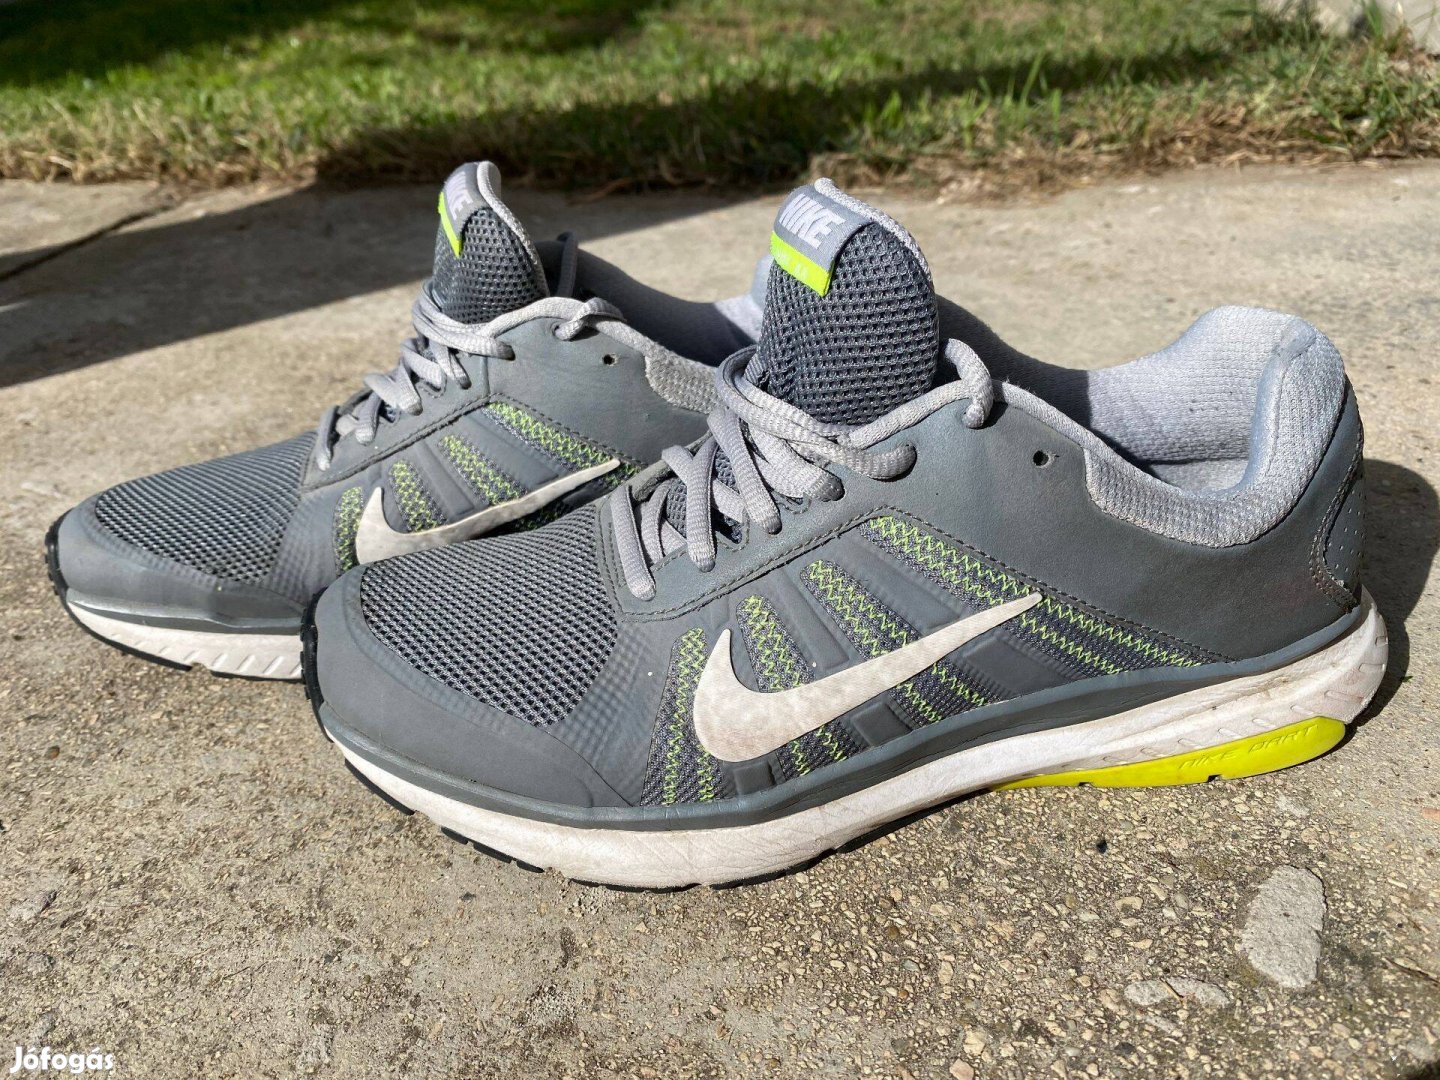 Nike cipő 40-es méretű